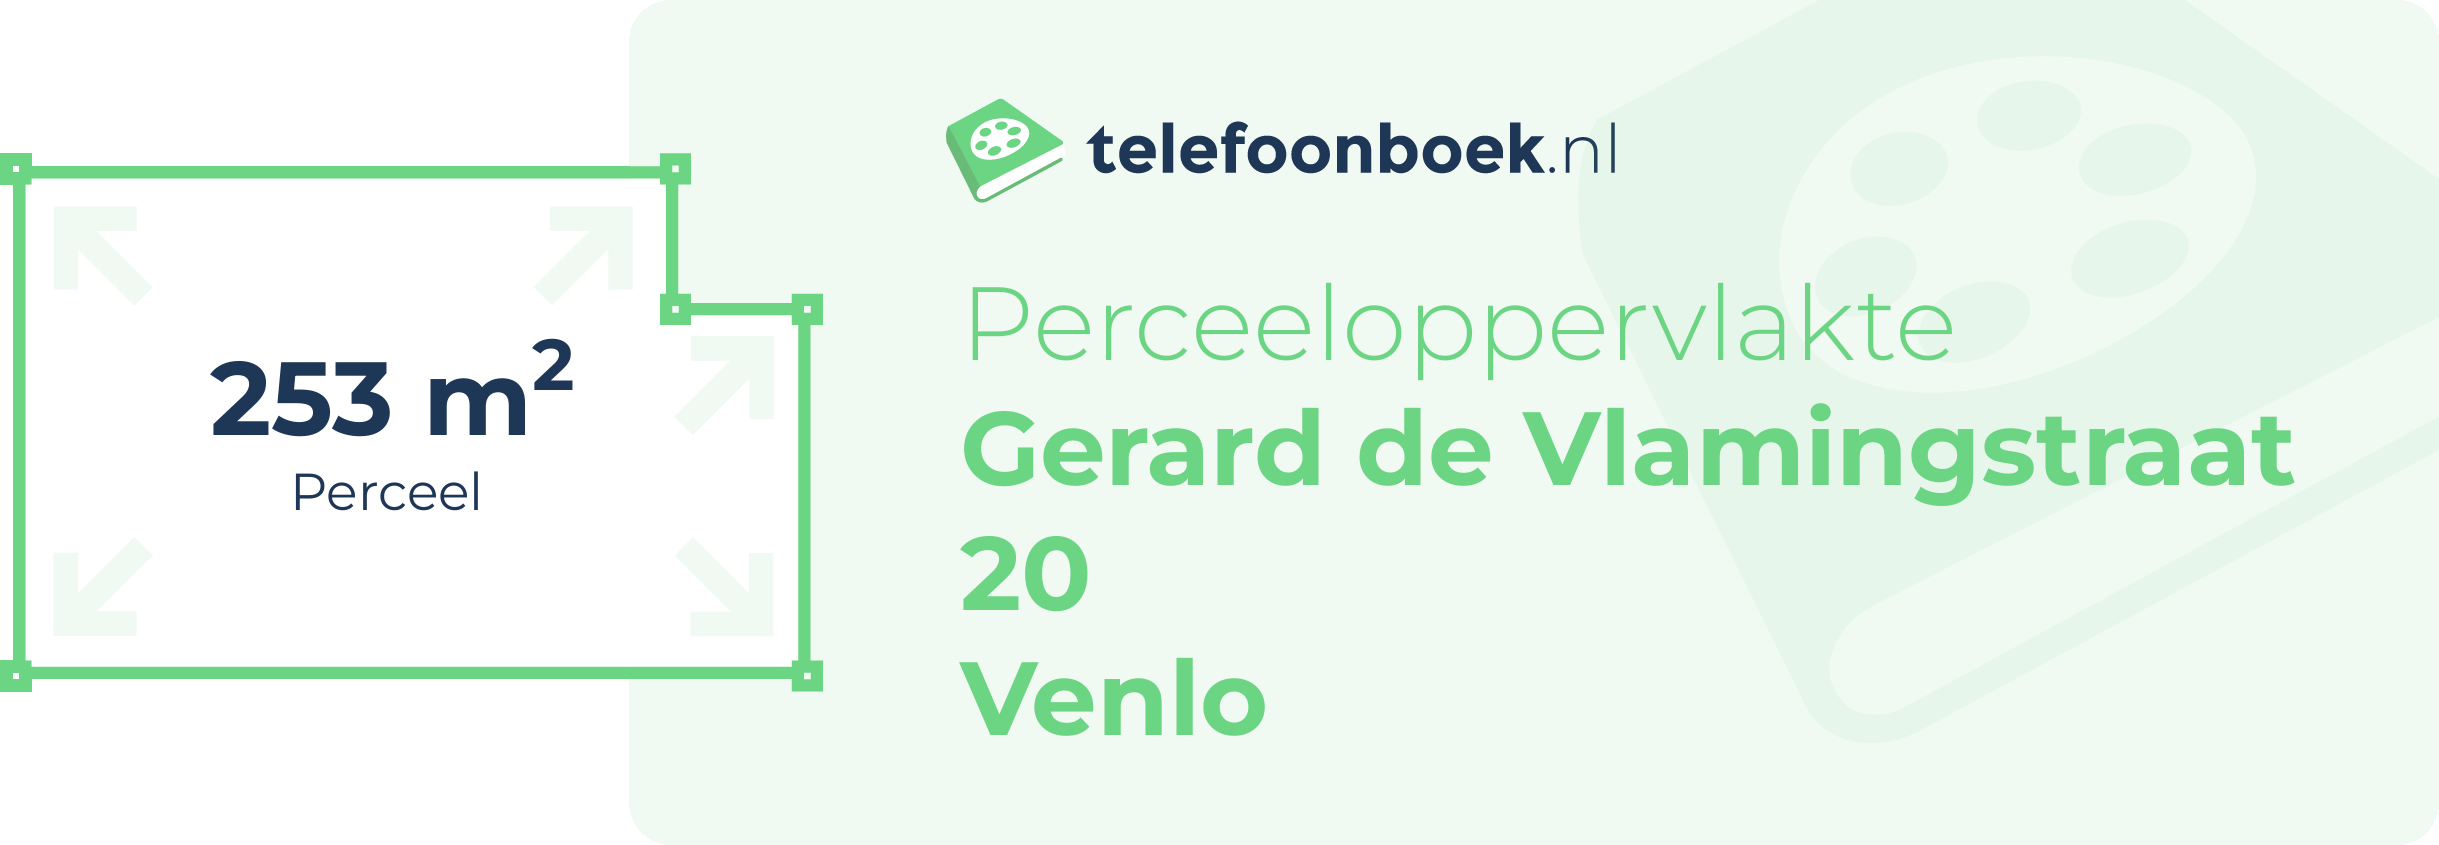 Perceeloppervlakte Gerard De Vlamingstraat 20 Venlo